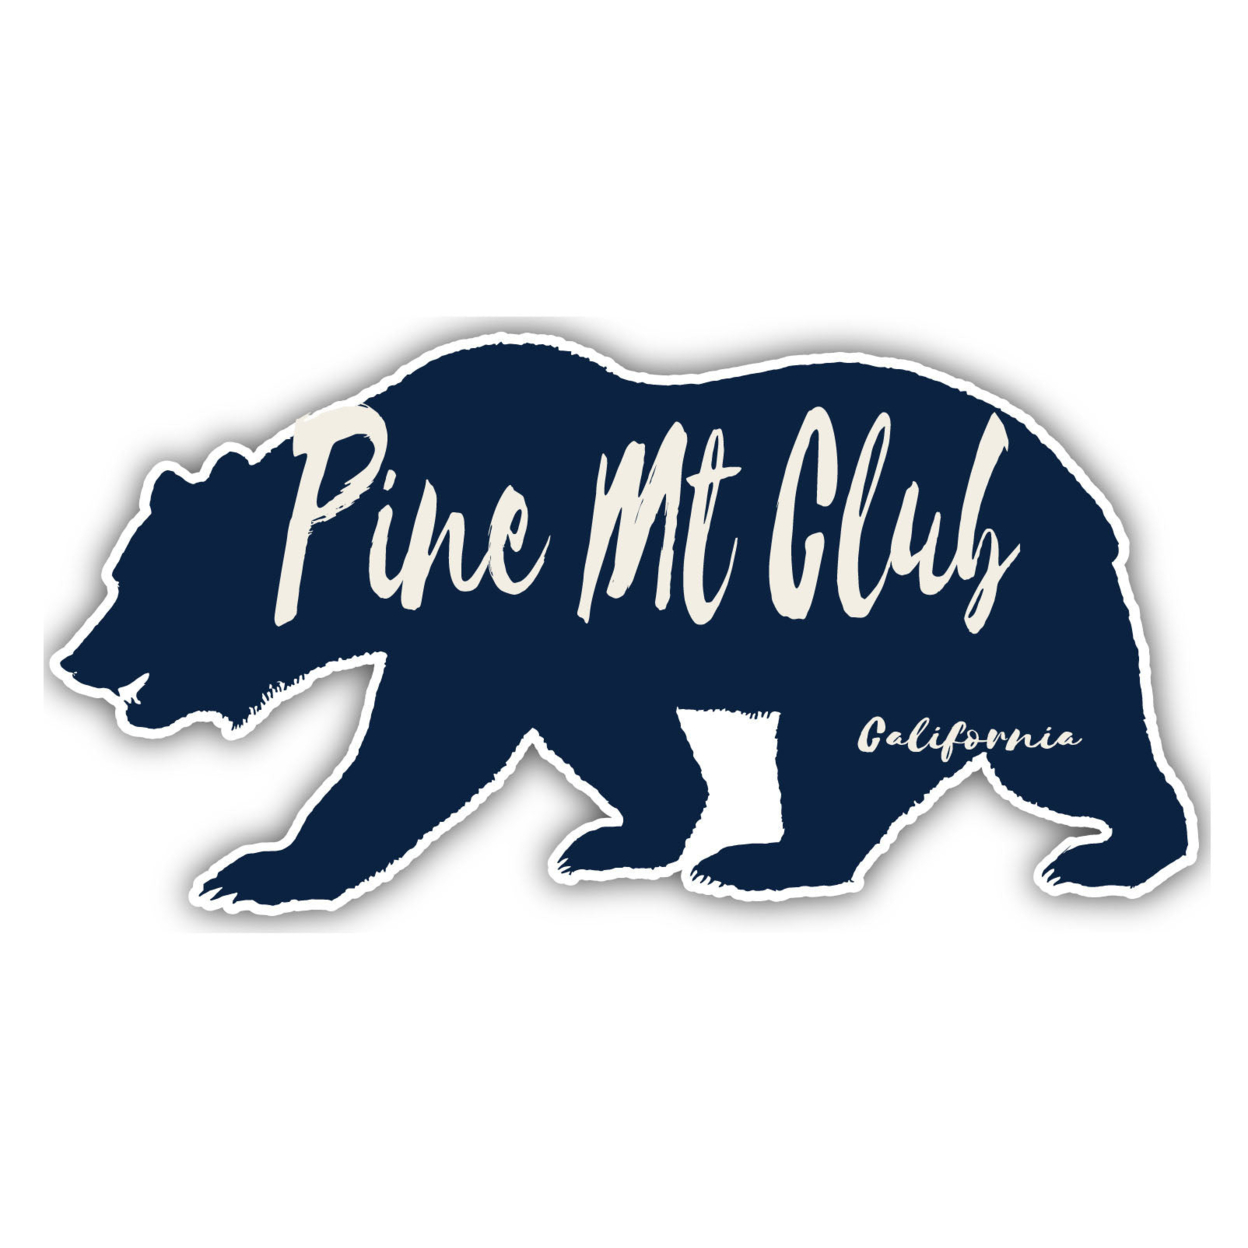 Pine Mt Club California Souvenir Decorative Stickers (Choose Theme And Size) - Single Unit, 4-Inch, Bear